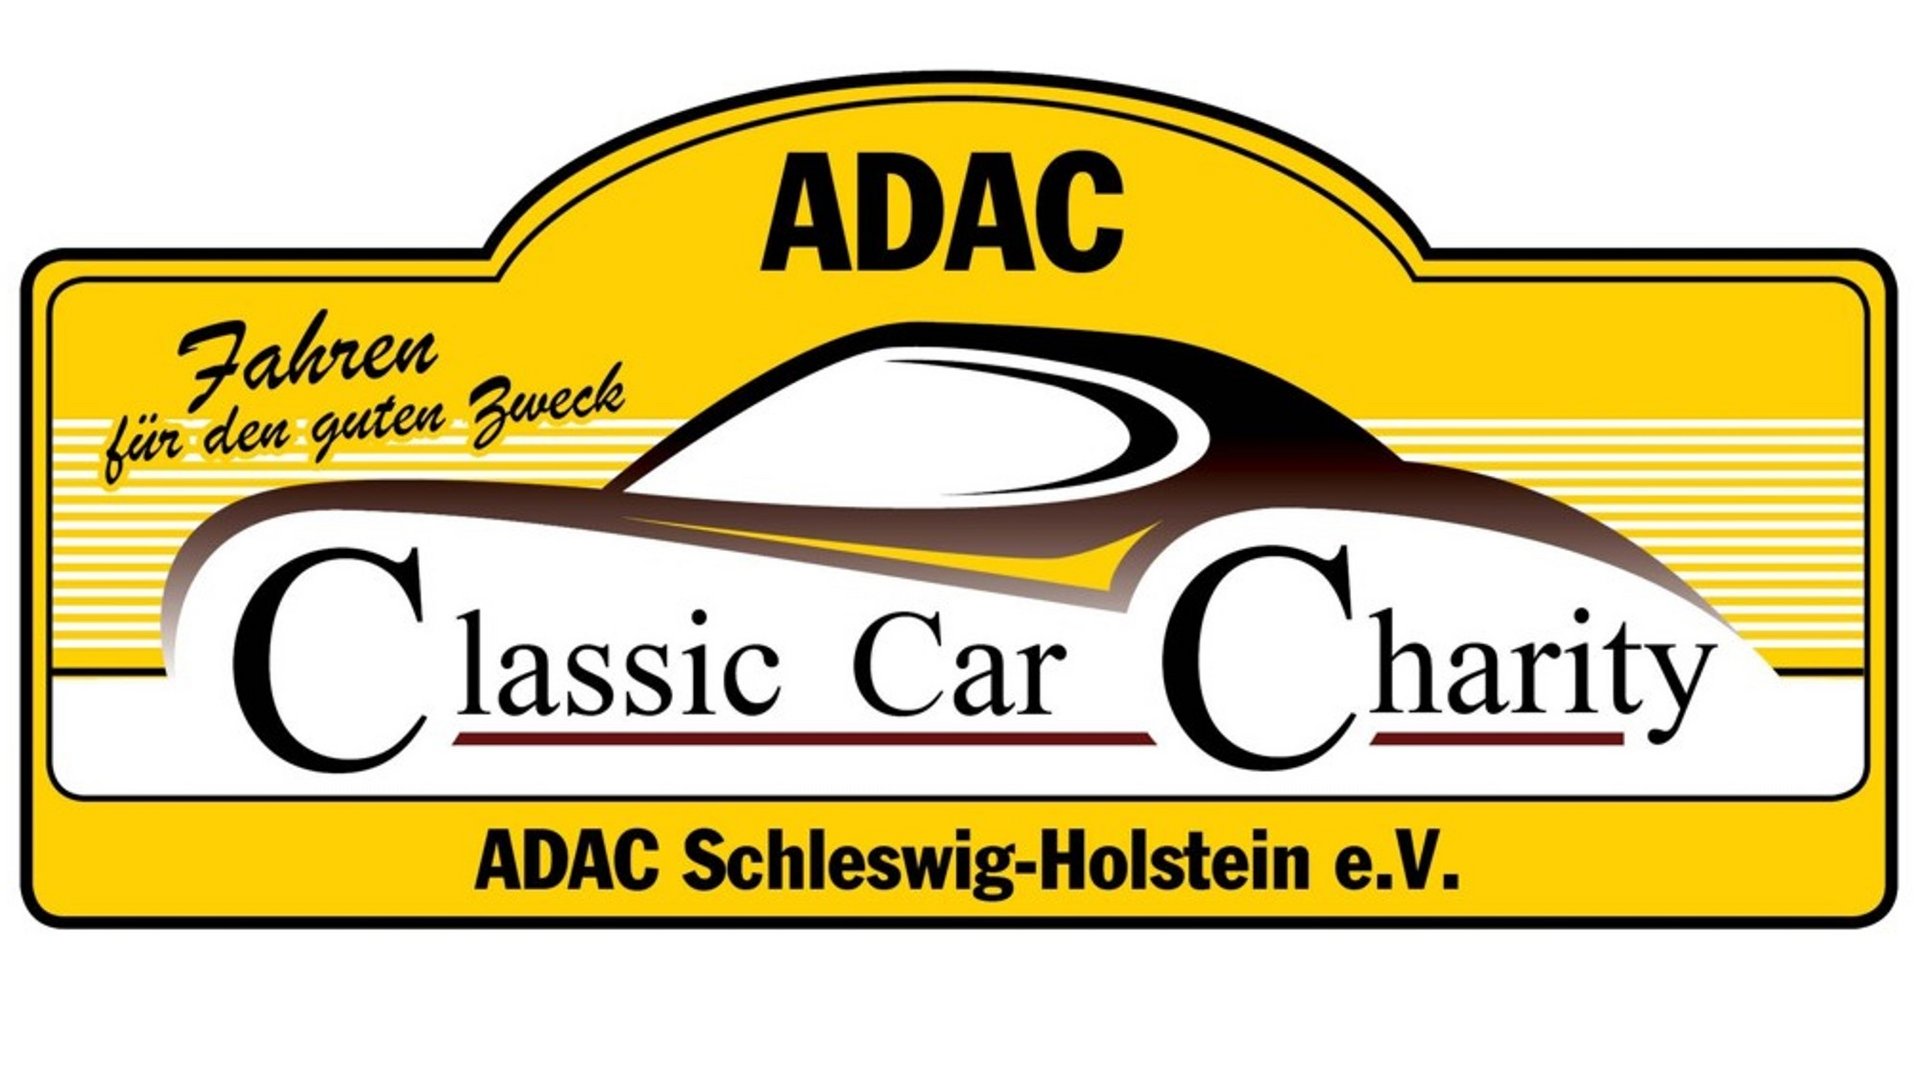 ADAC Classic Car Charity